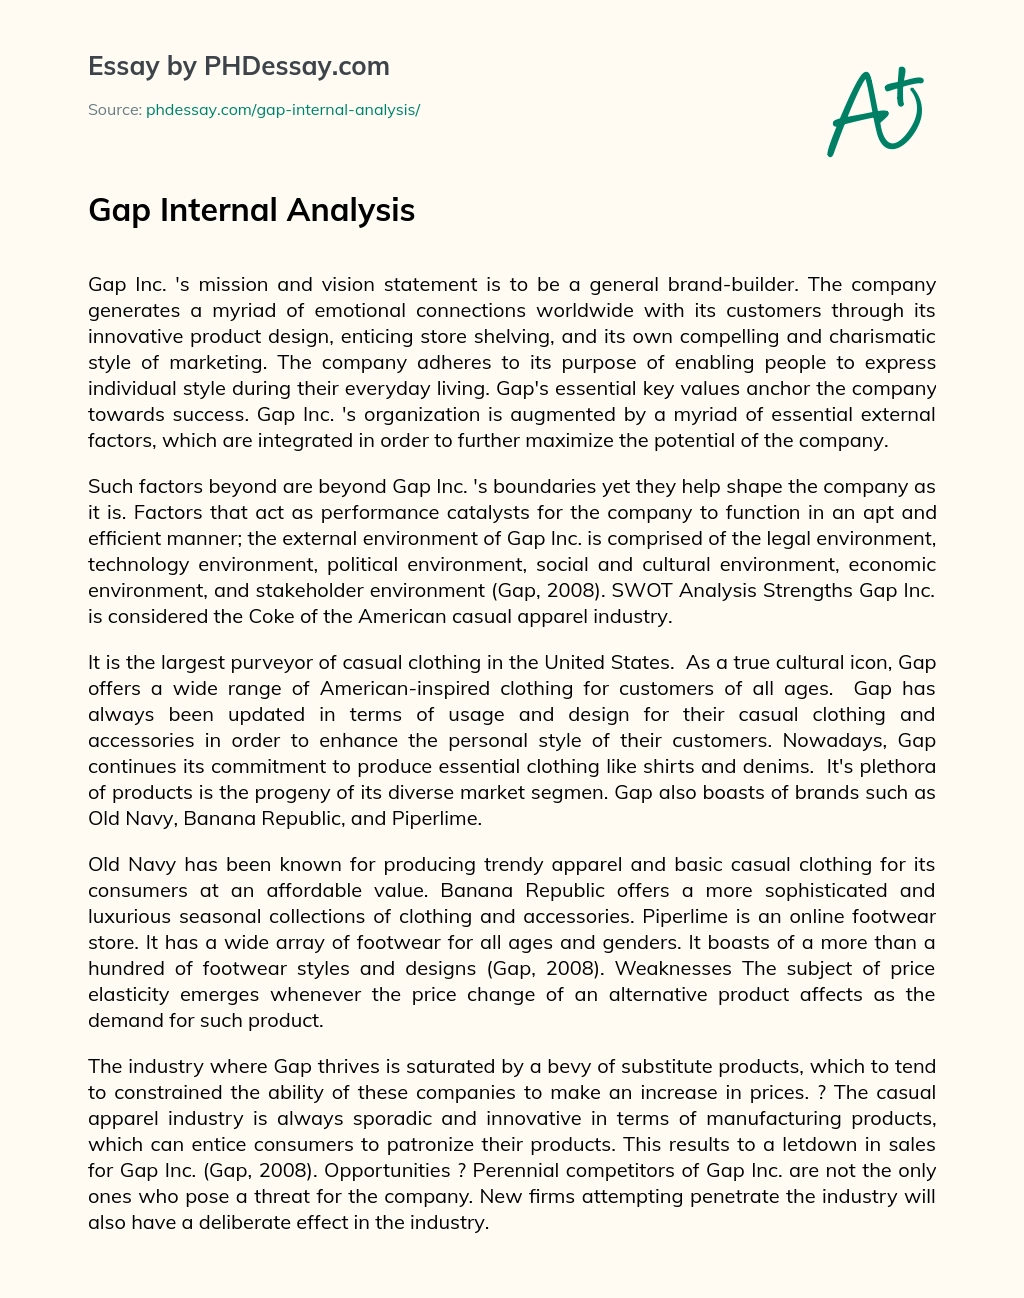 Gap Internal Analysis essay